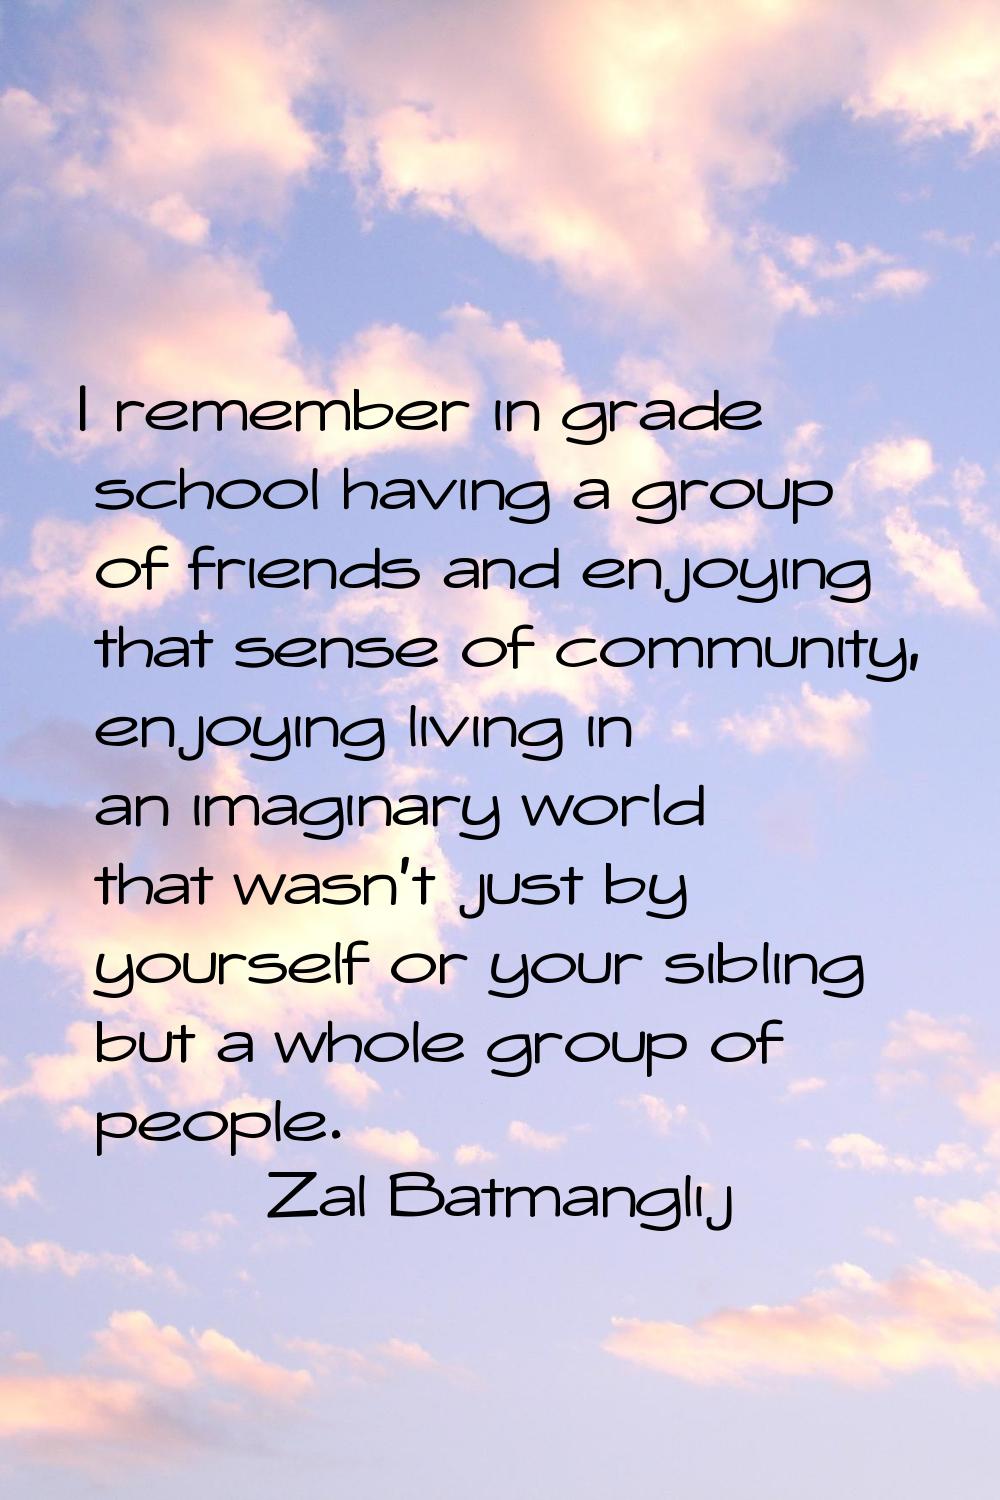 I remember in grade school having a group of friends and enjoying that sense of community, enjoying